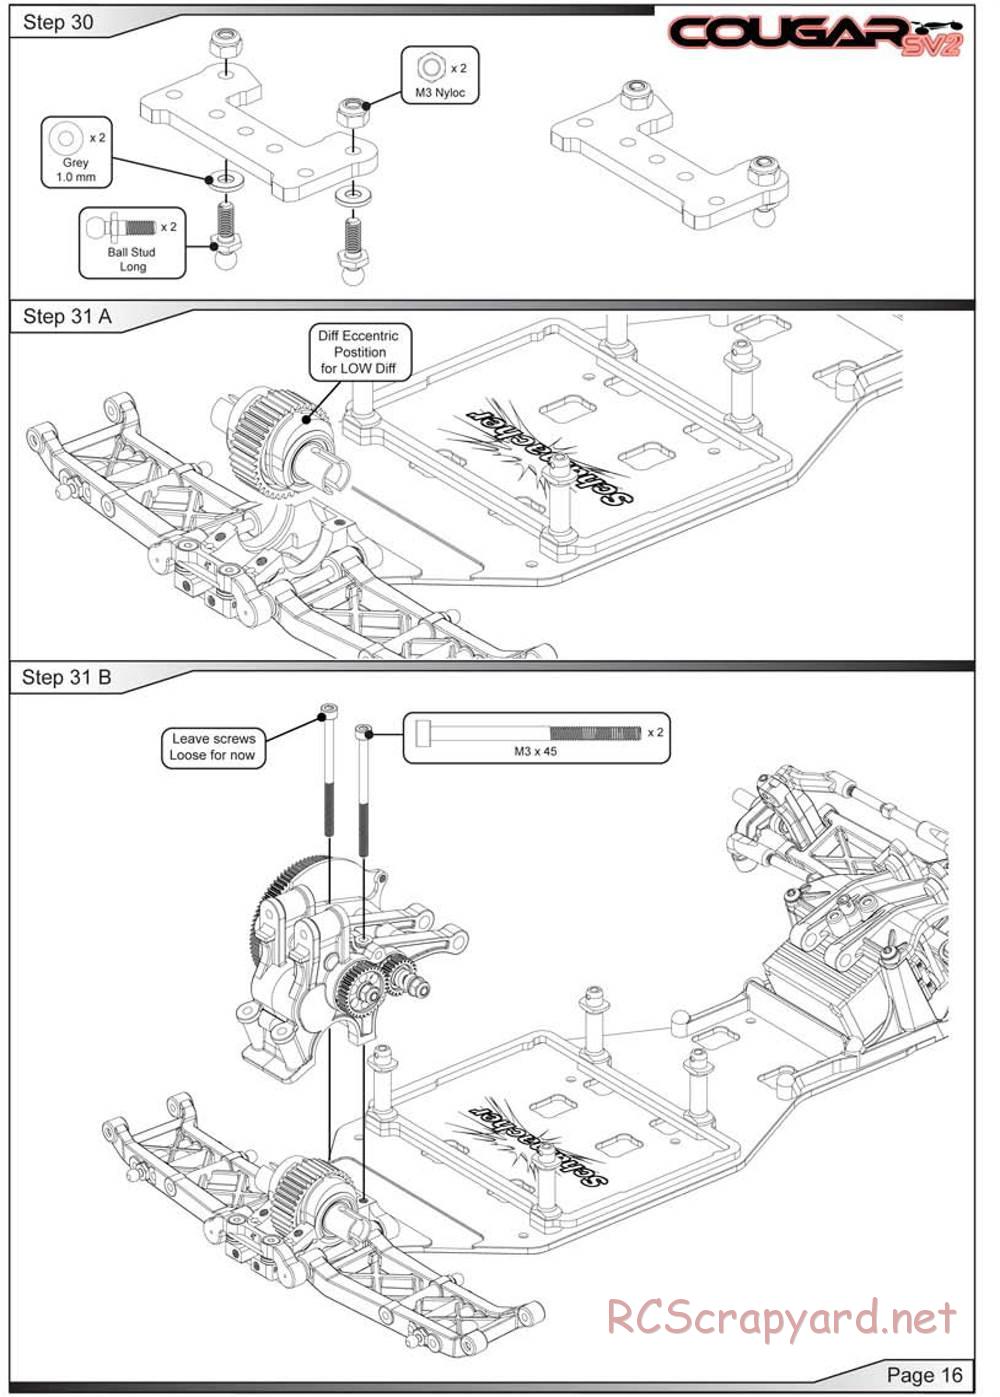 Schumacher - Cougar SV2 - Manual - Page 17